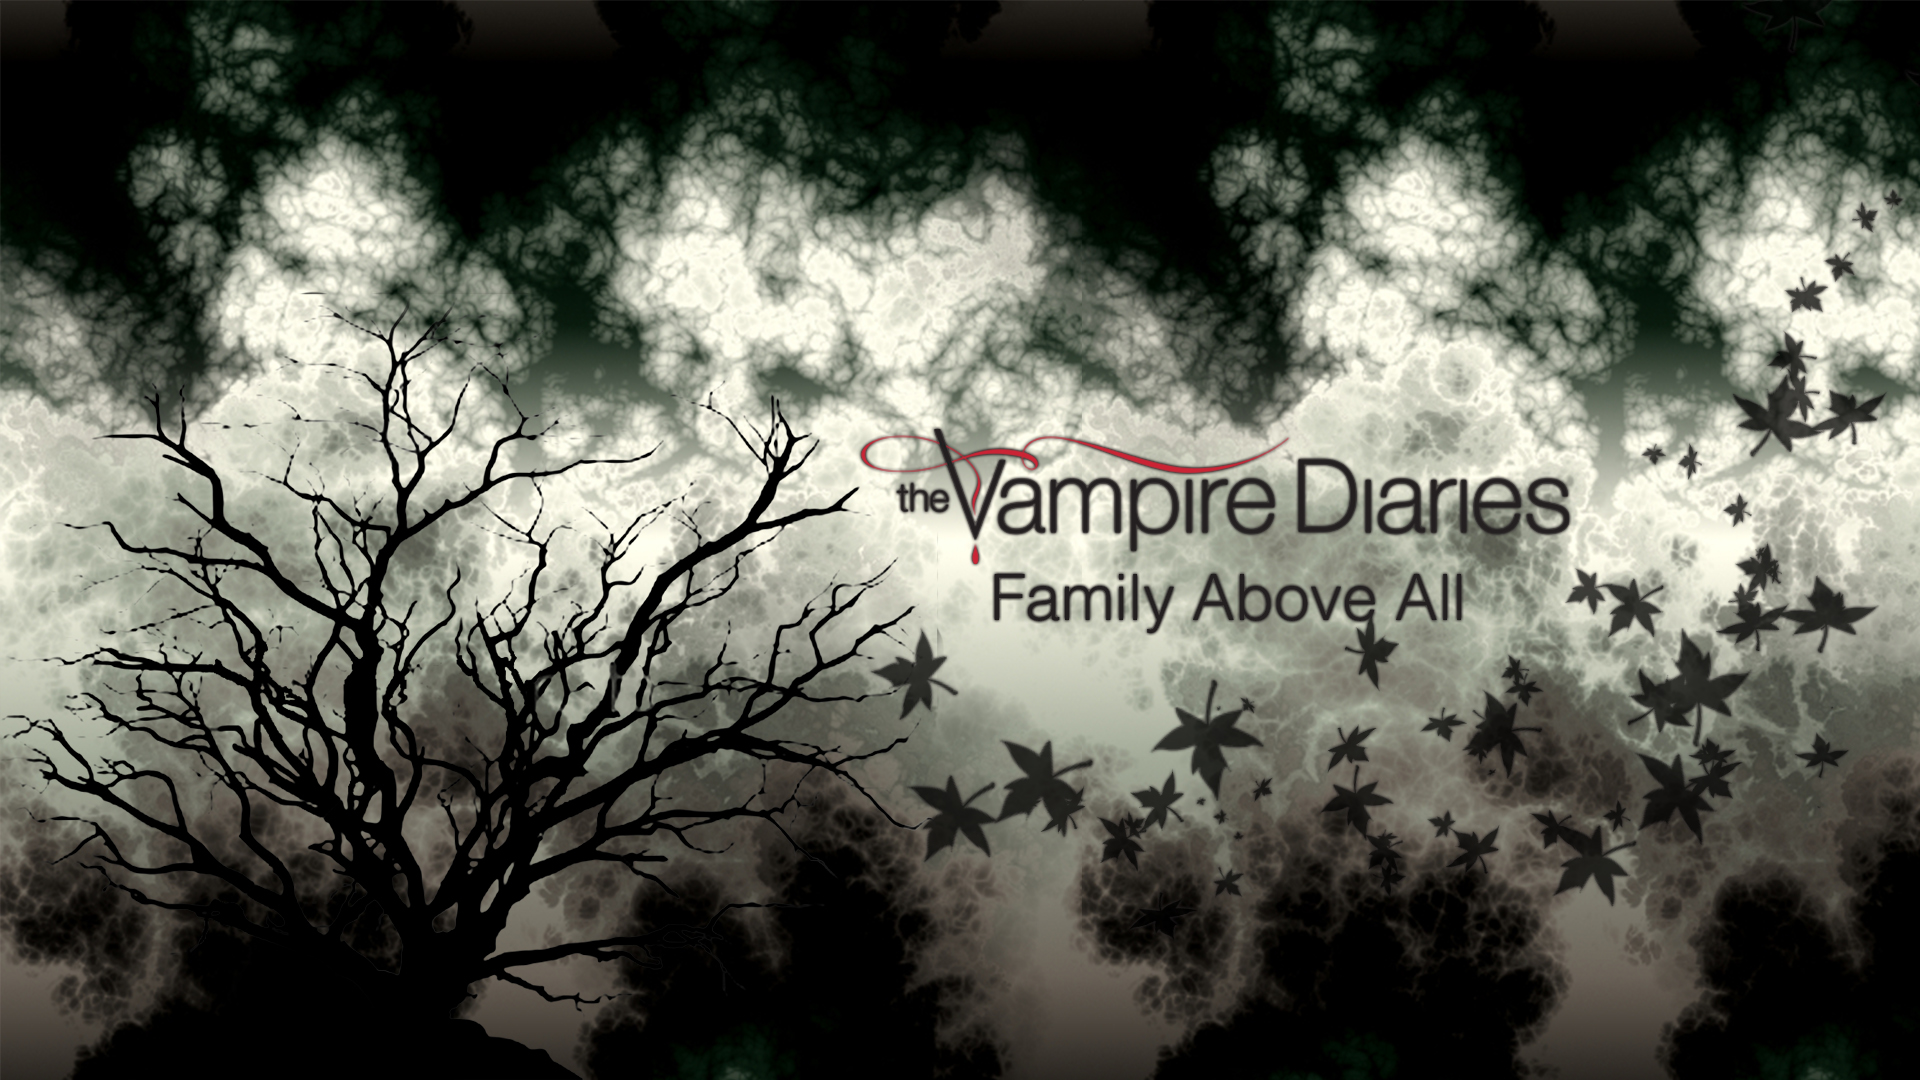 The Vampire Diaries Wallpaper Series   The Vampire Diaries Wallpaper